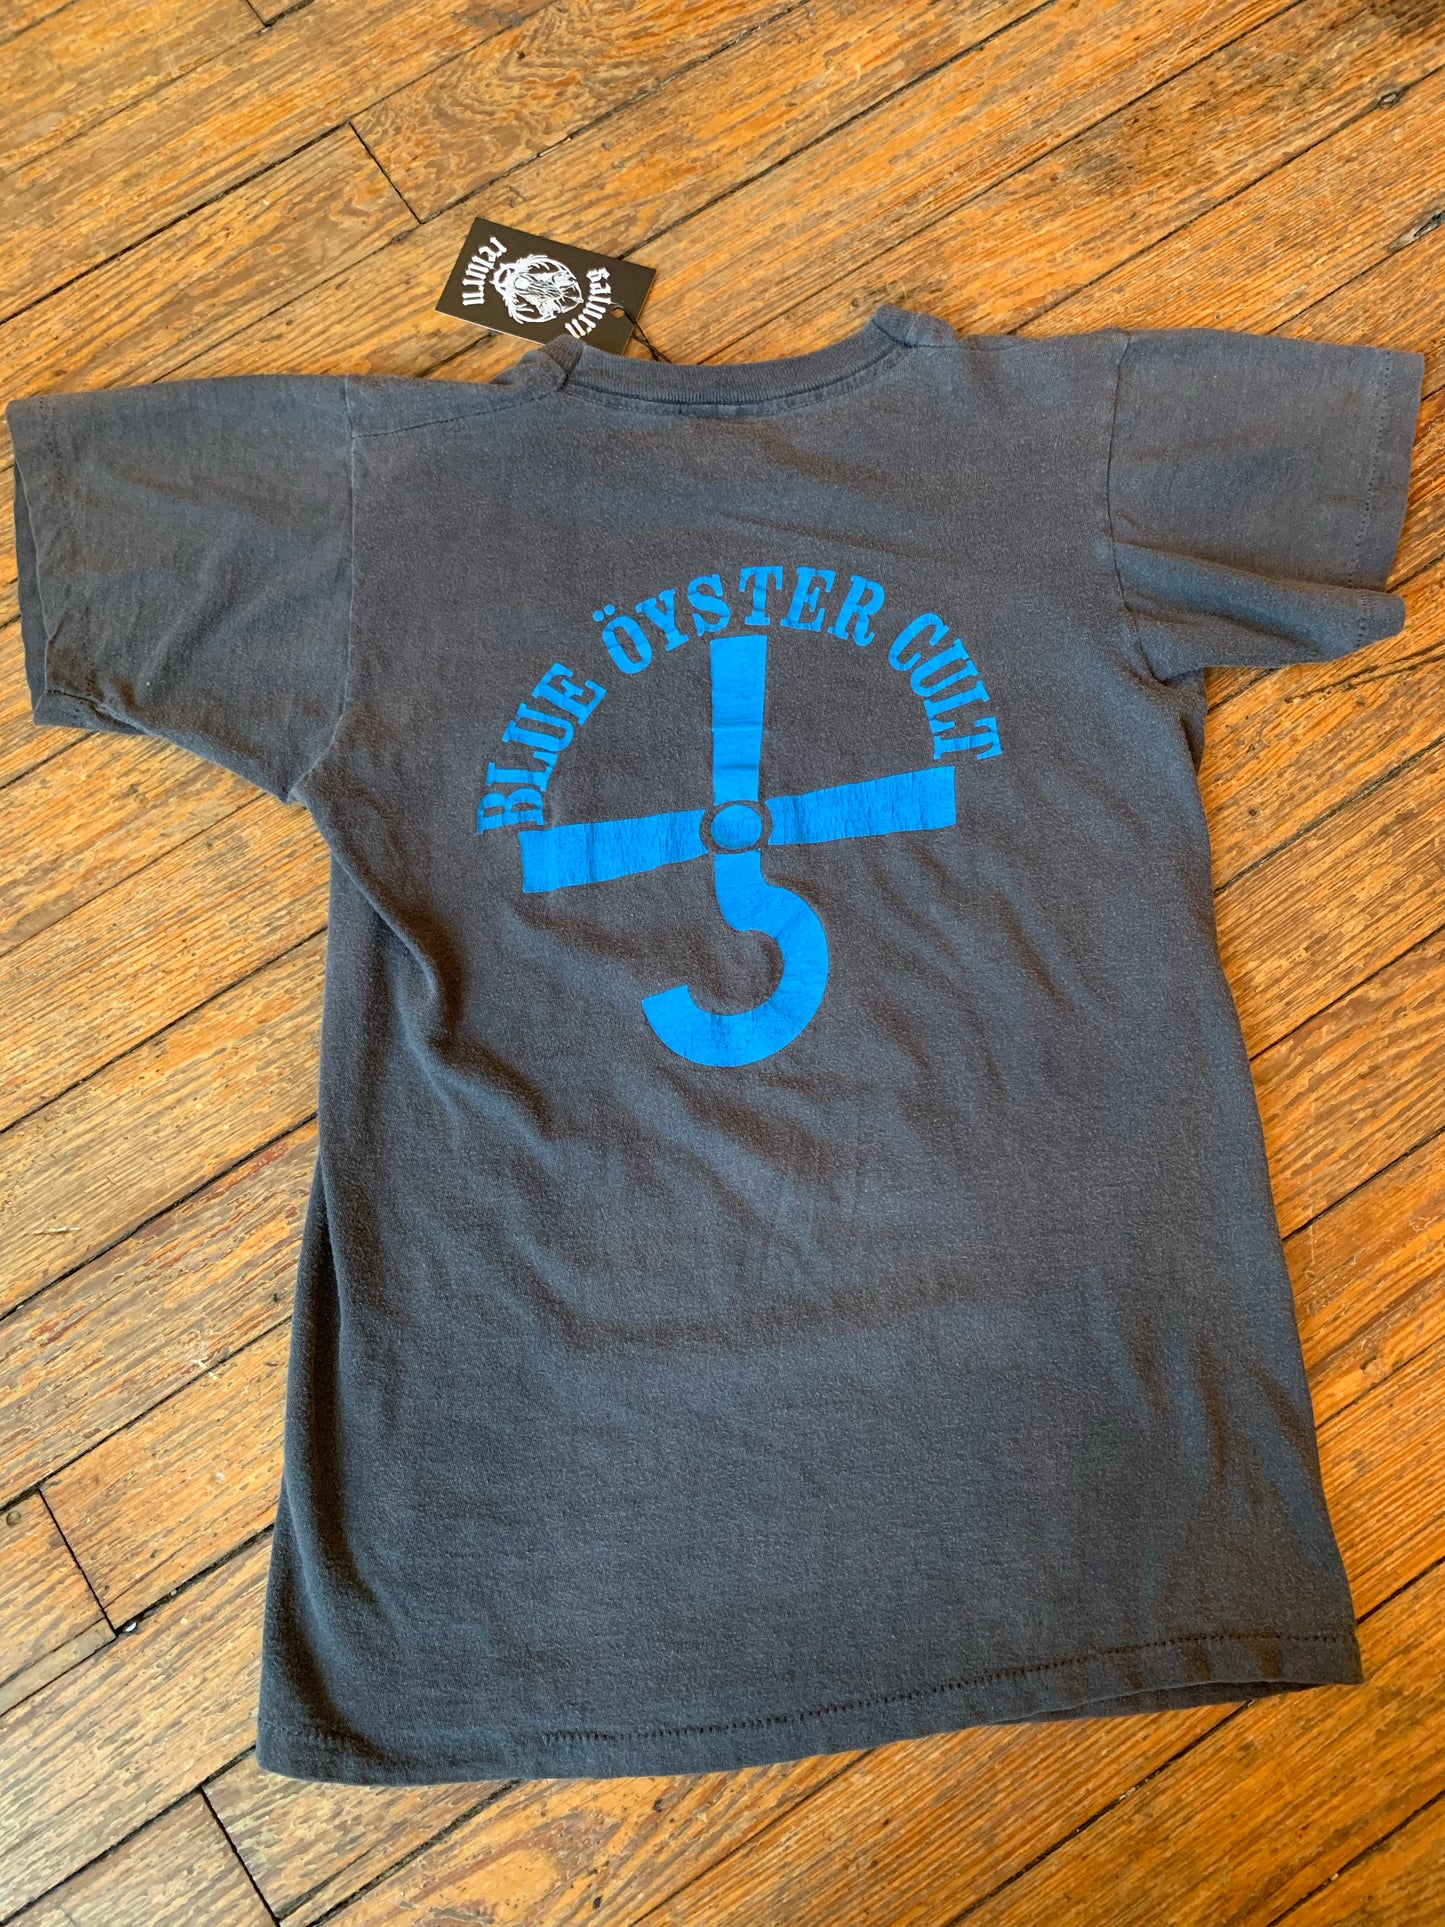 Vintage Blue Öyster Cult Self-Titled Album Early 80’s T-Shirt